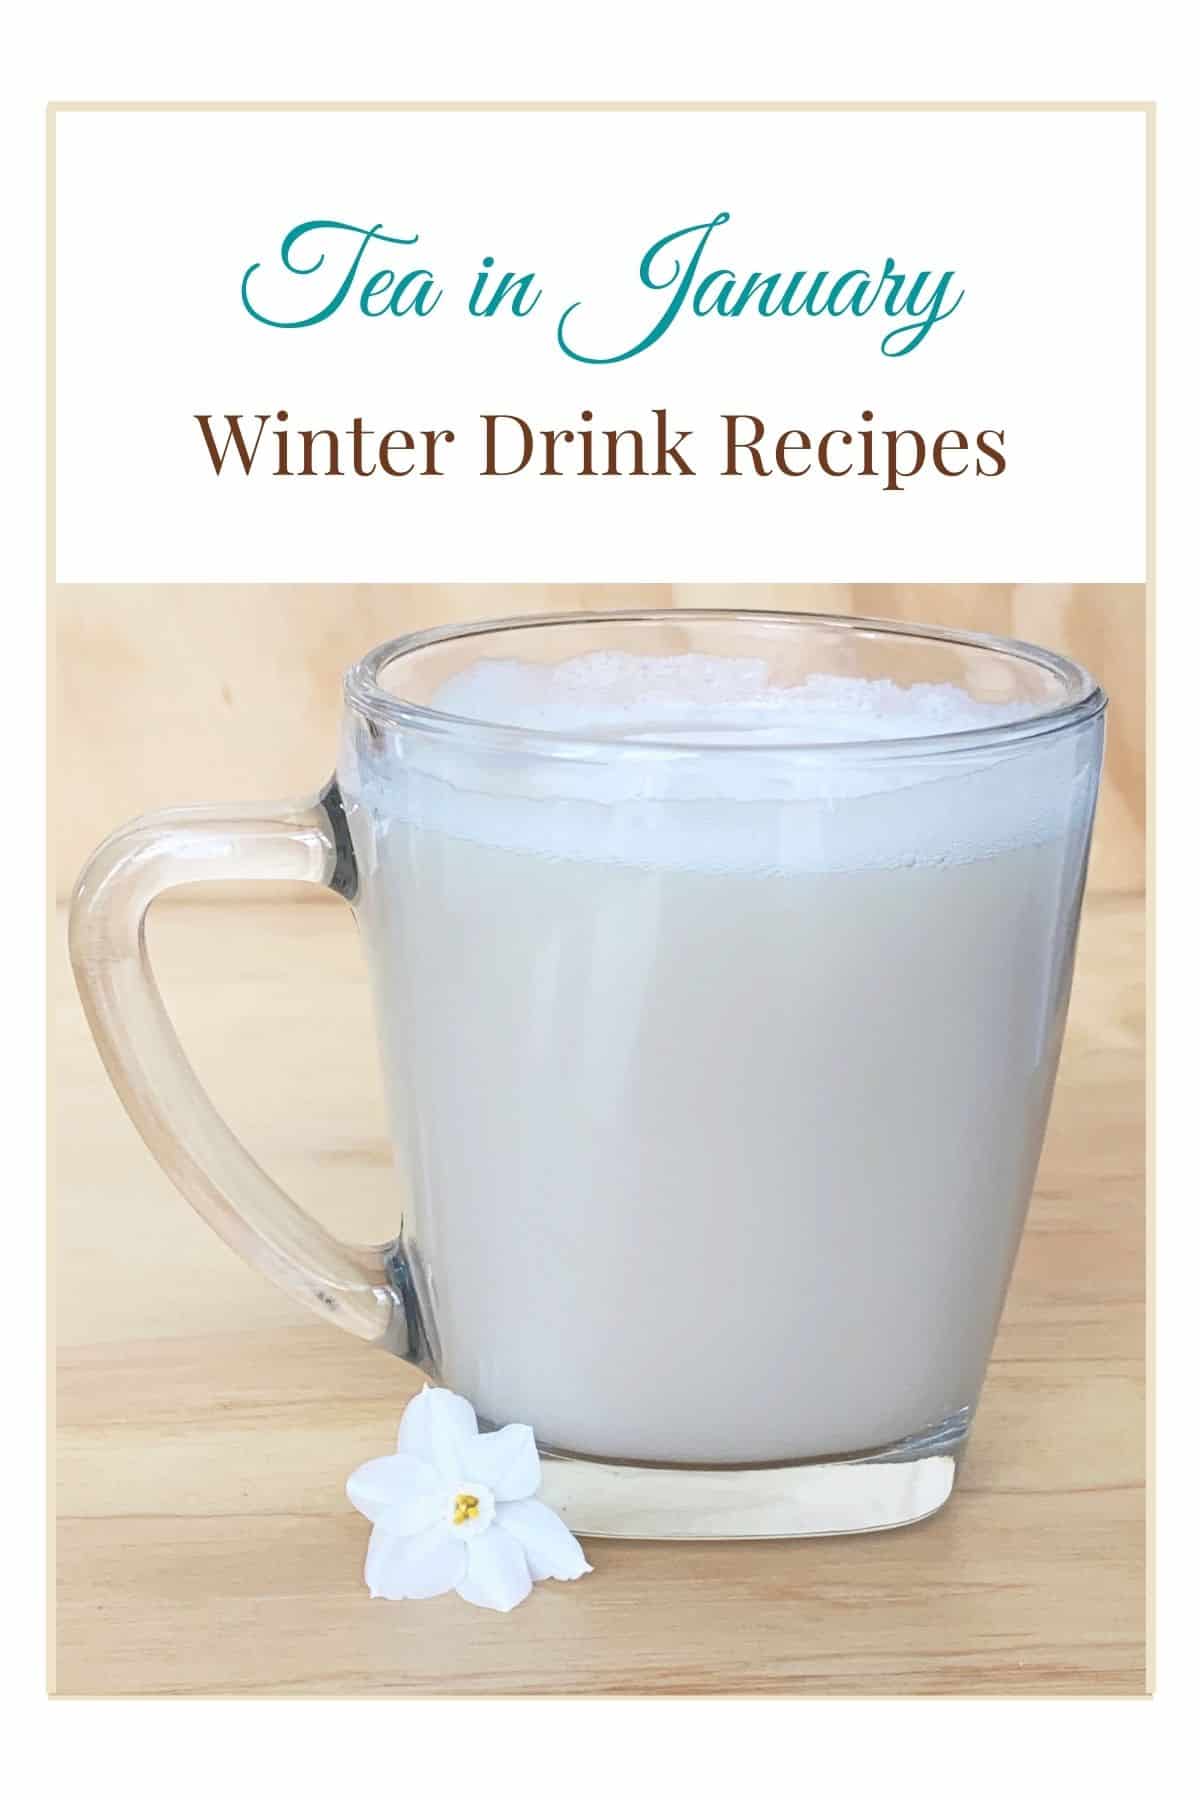 Tea in January Winter Drink Recipes